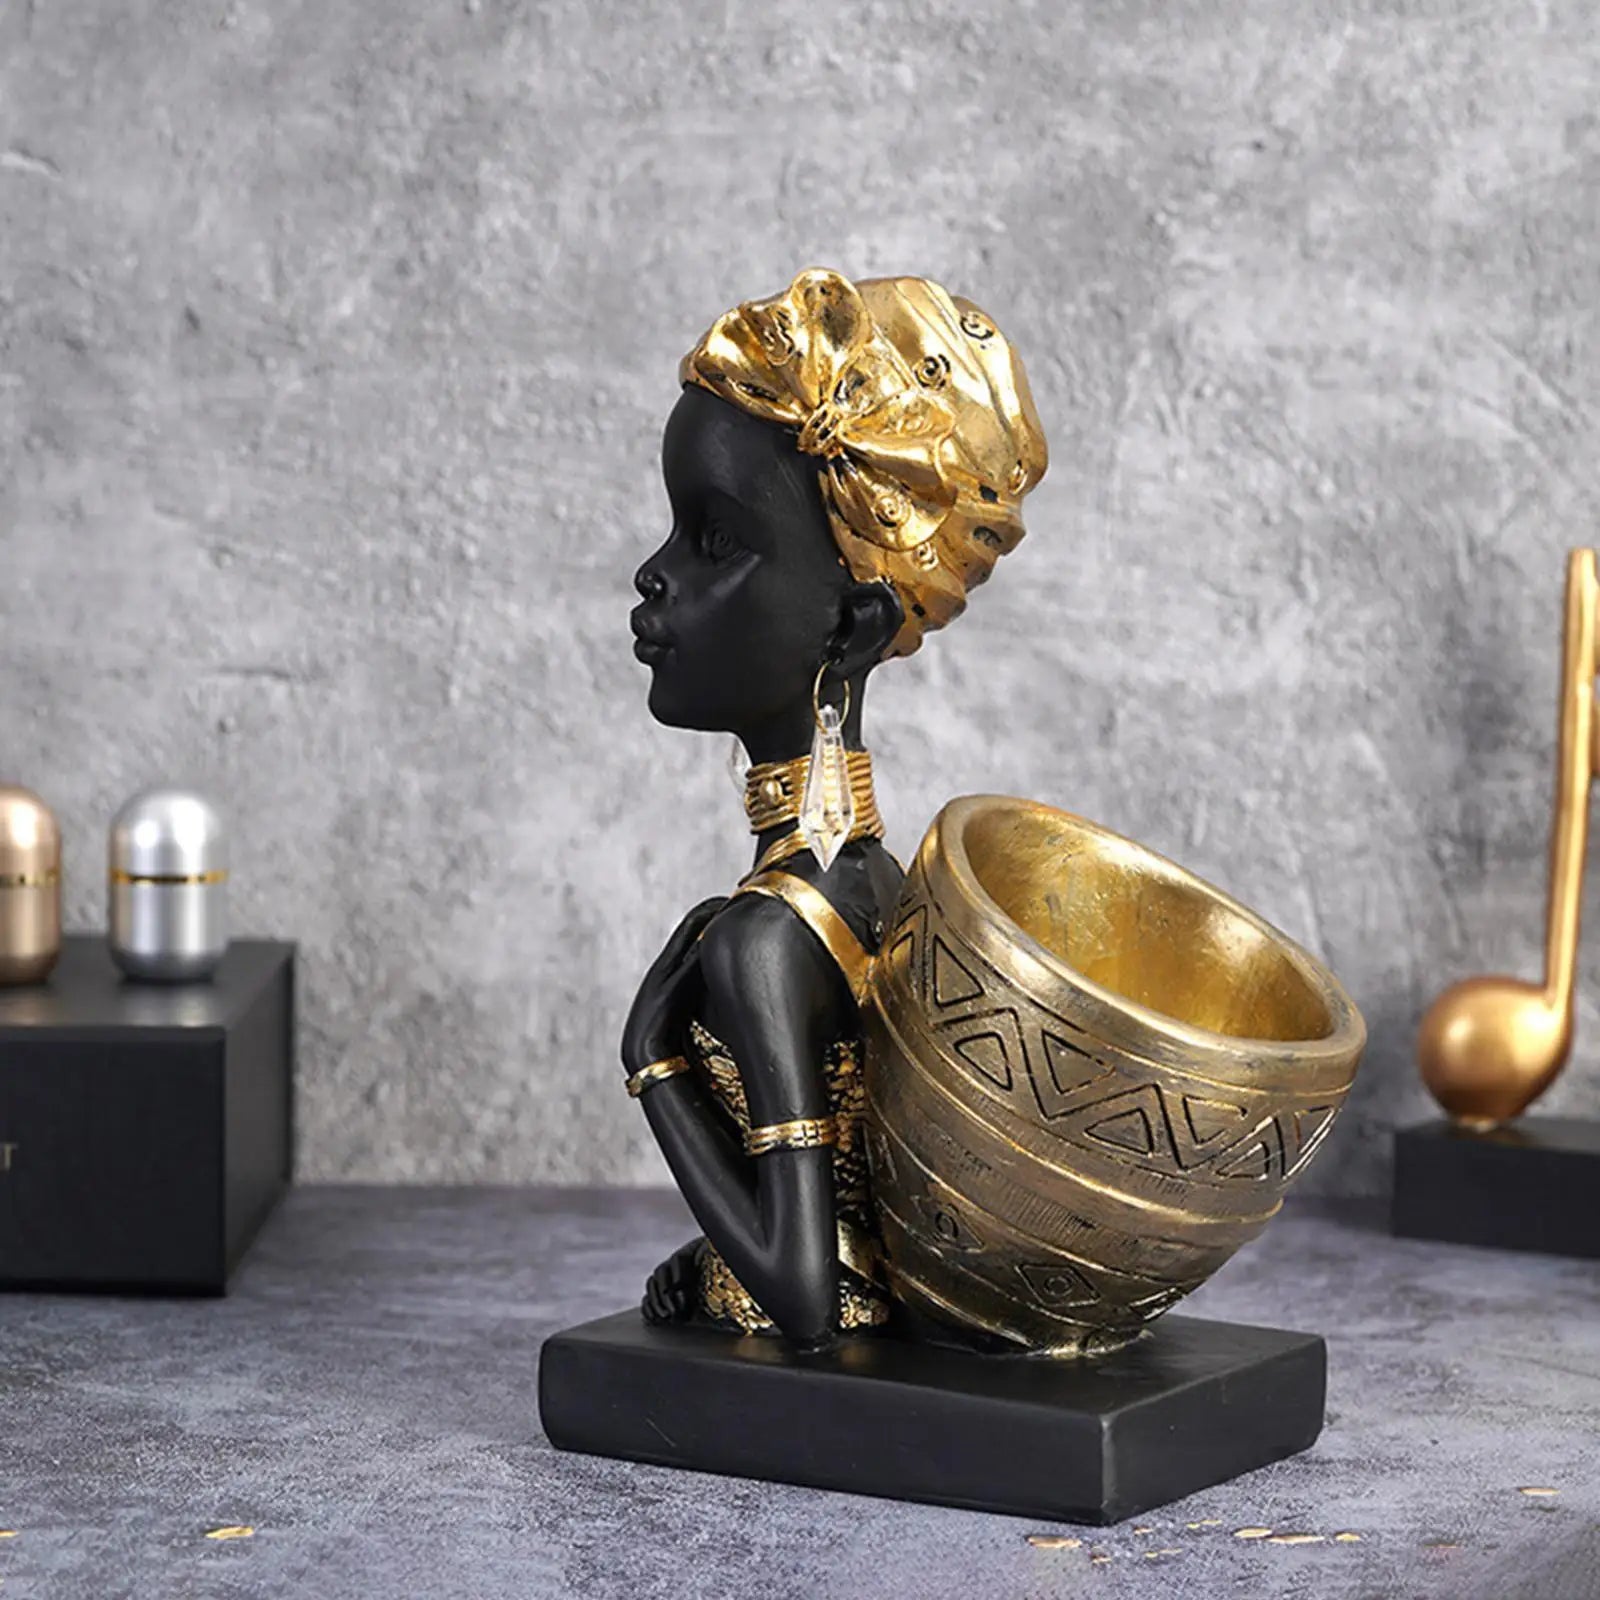 Creative Lady Statue Sculpture African Human Harts Ornament för Bedroom Table Hotel